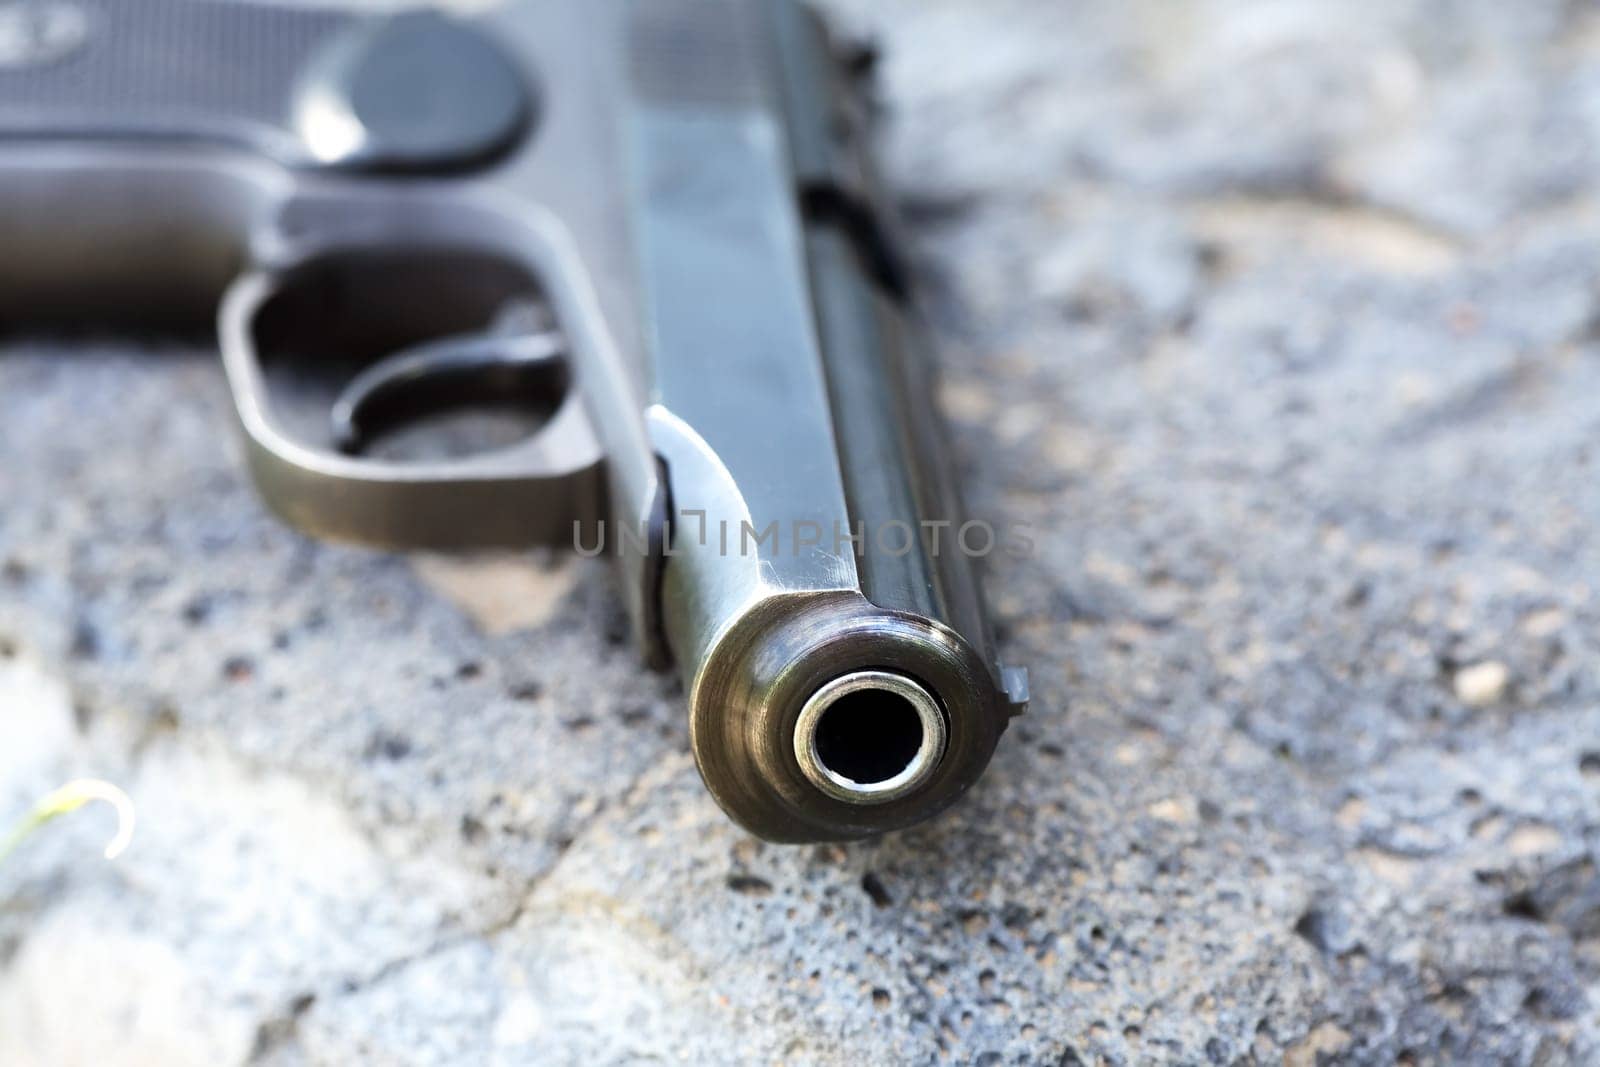 Handgun closeup on gray stone background